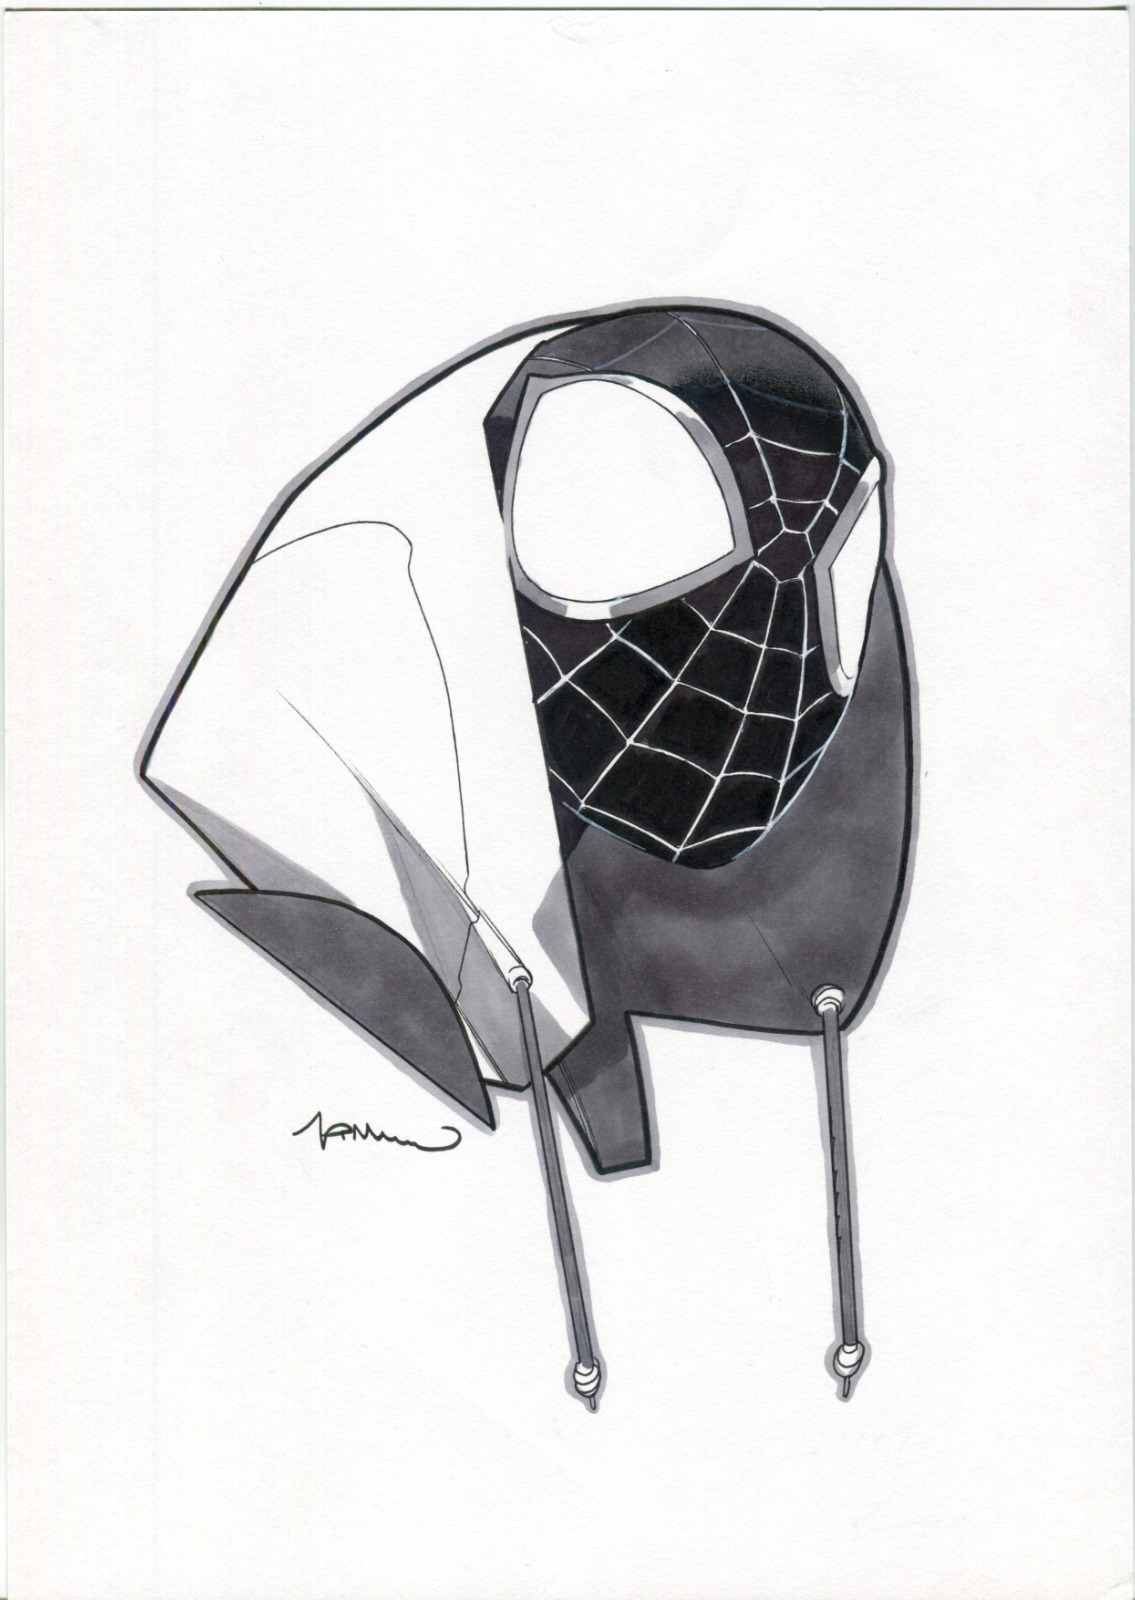 MILES MORALES as SPIDER-MAN - Marvel Original Art by SIMONE DI MEO - 9\'\' x 12\'\' 